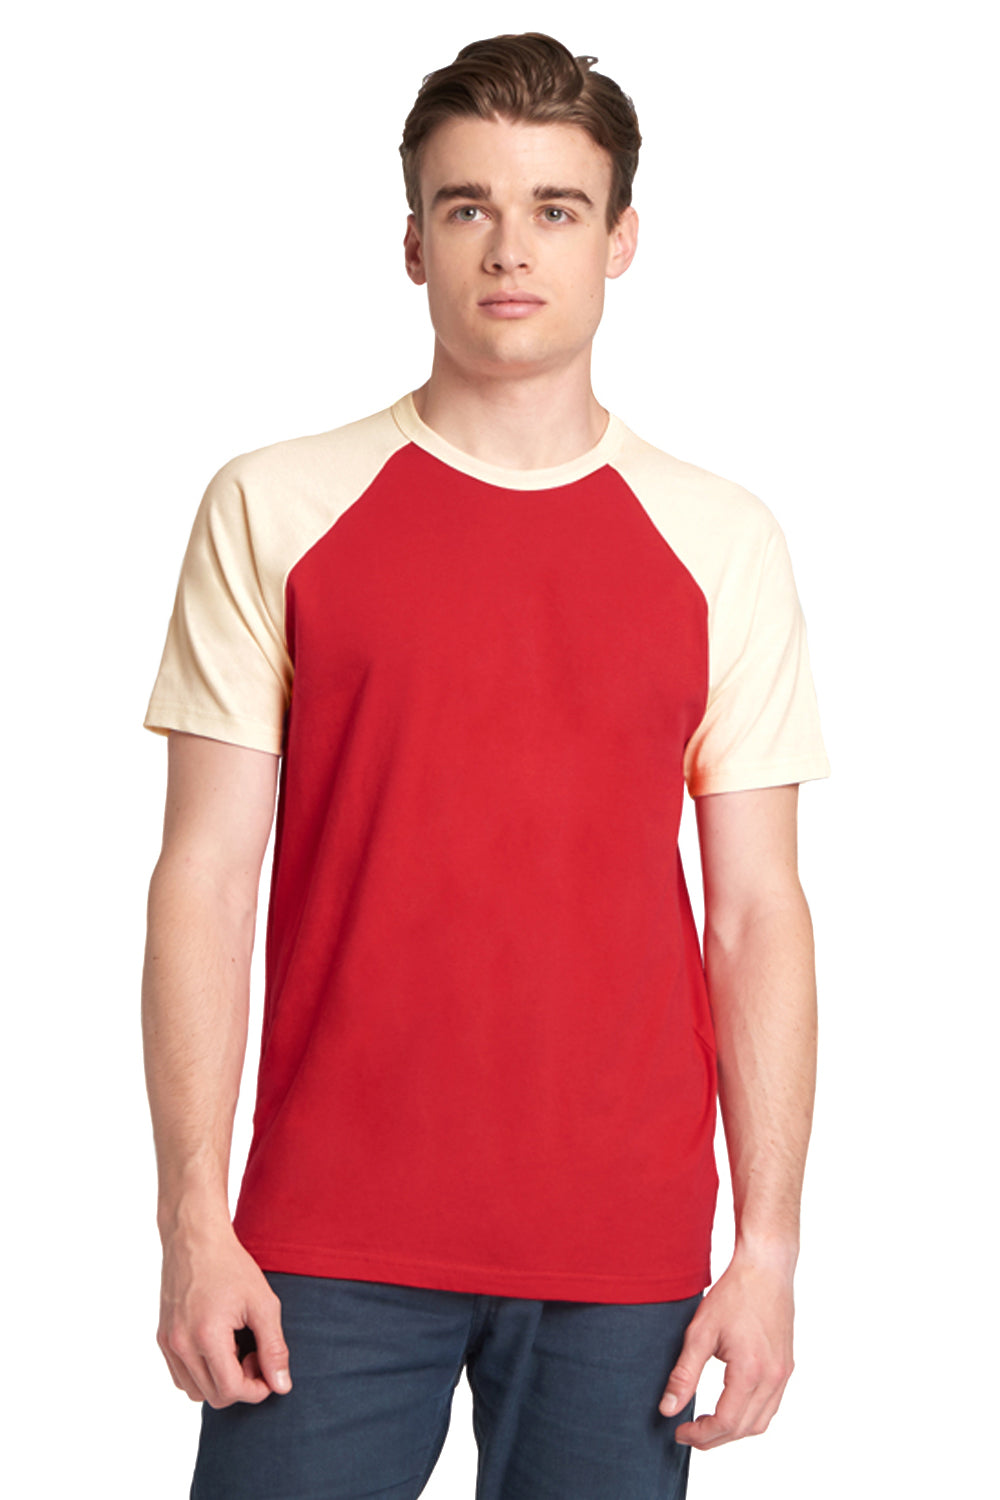 Next Level N3650 Fine Jersey Short Sleeve Crewneck T-Shirt Red/Natural Front